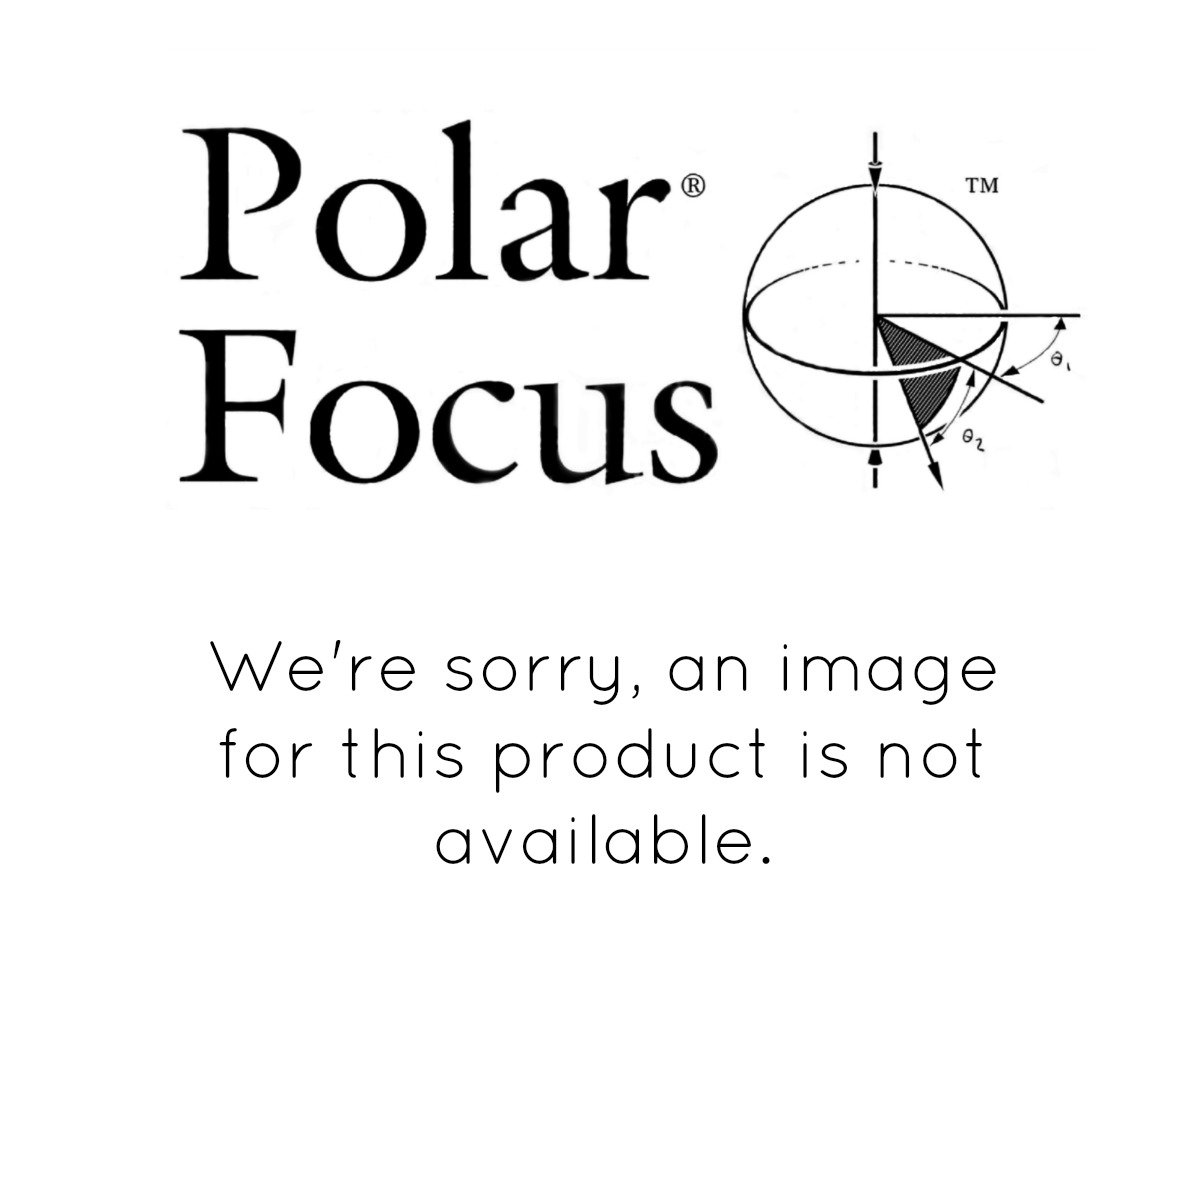 Polar Focus No Image Available